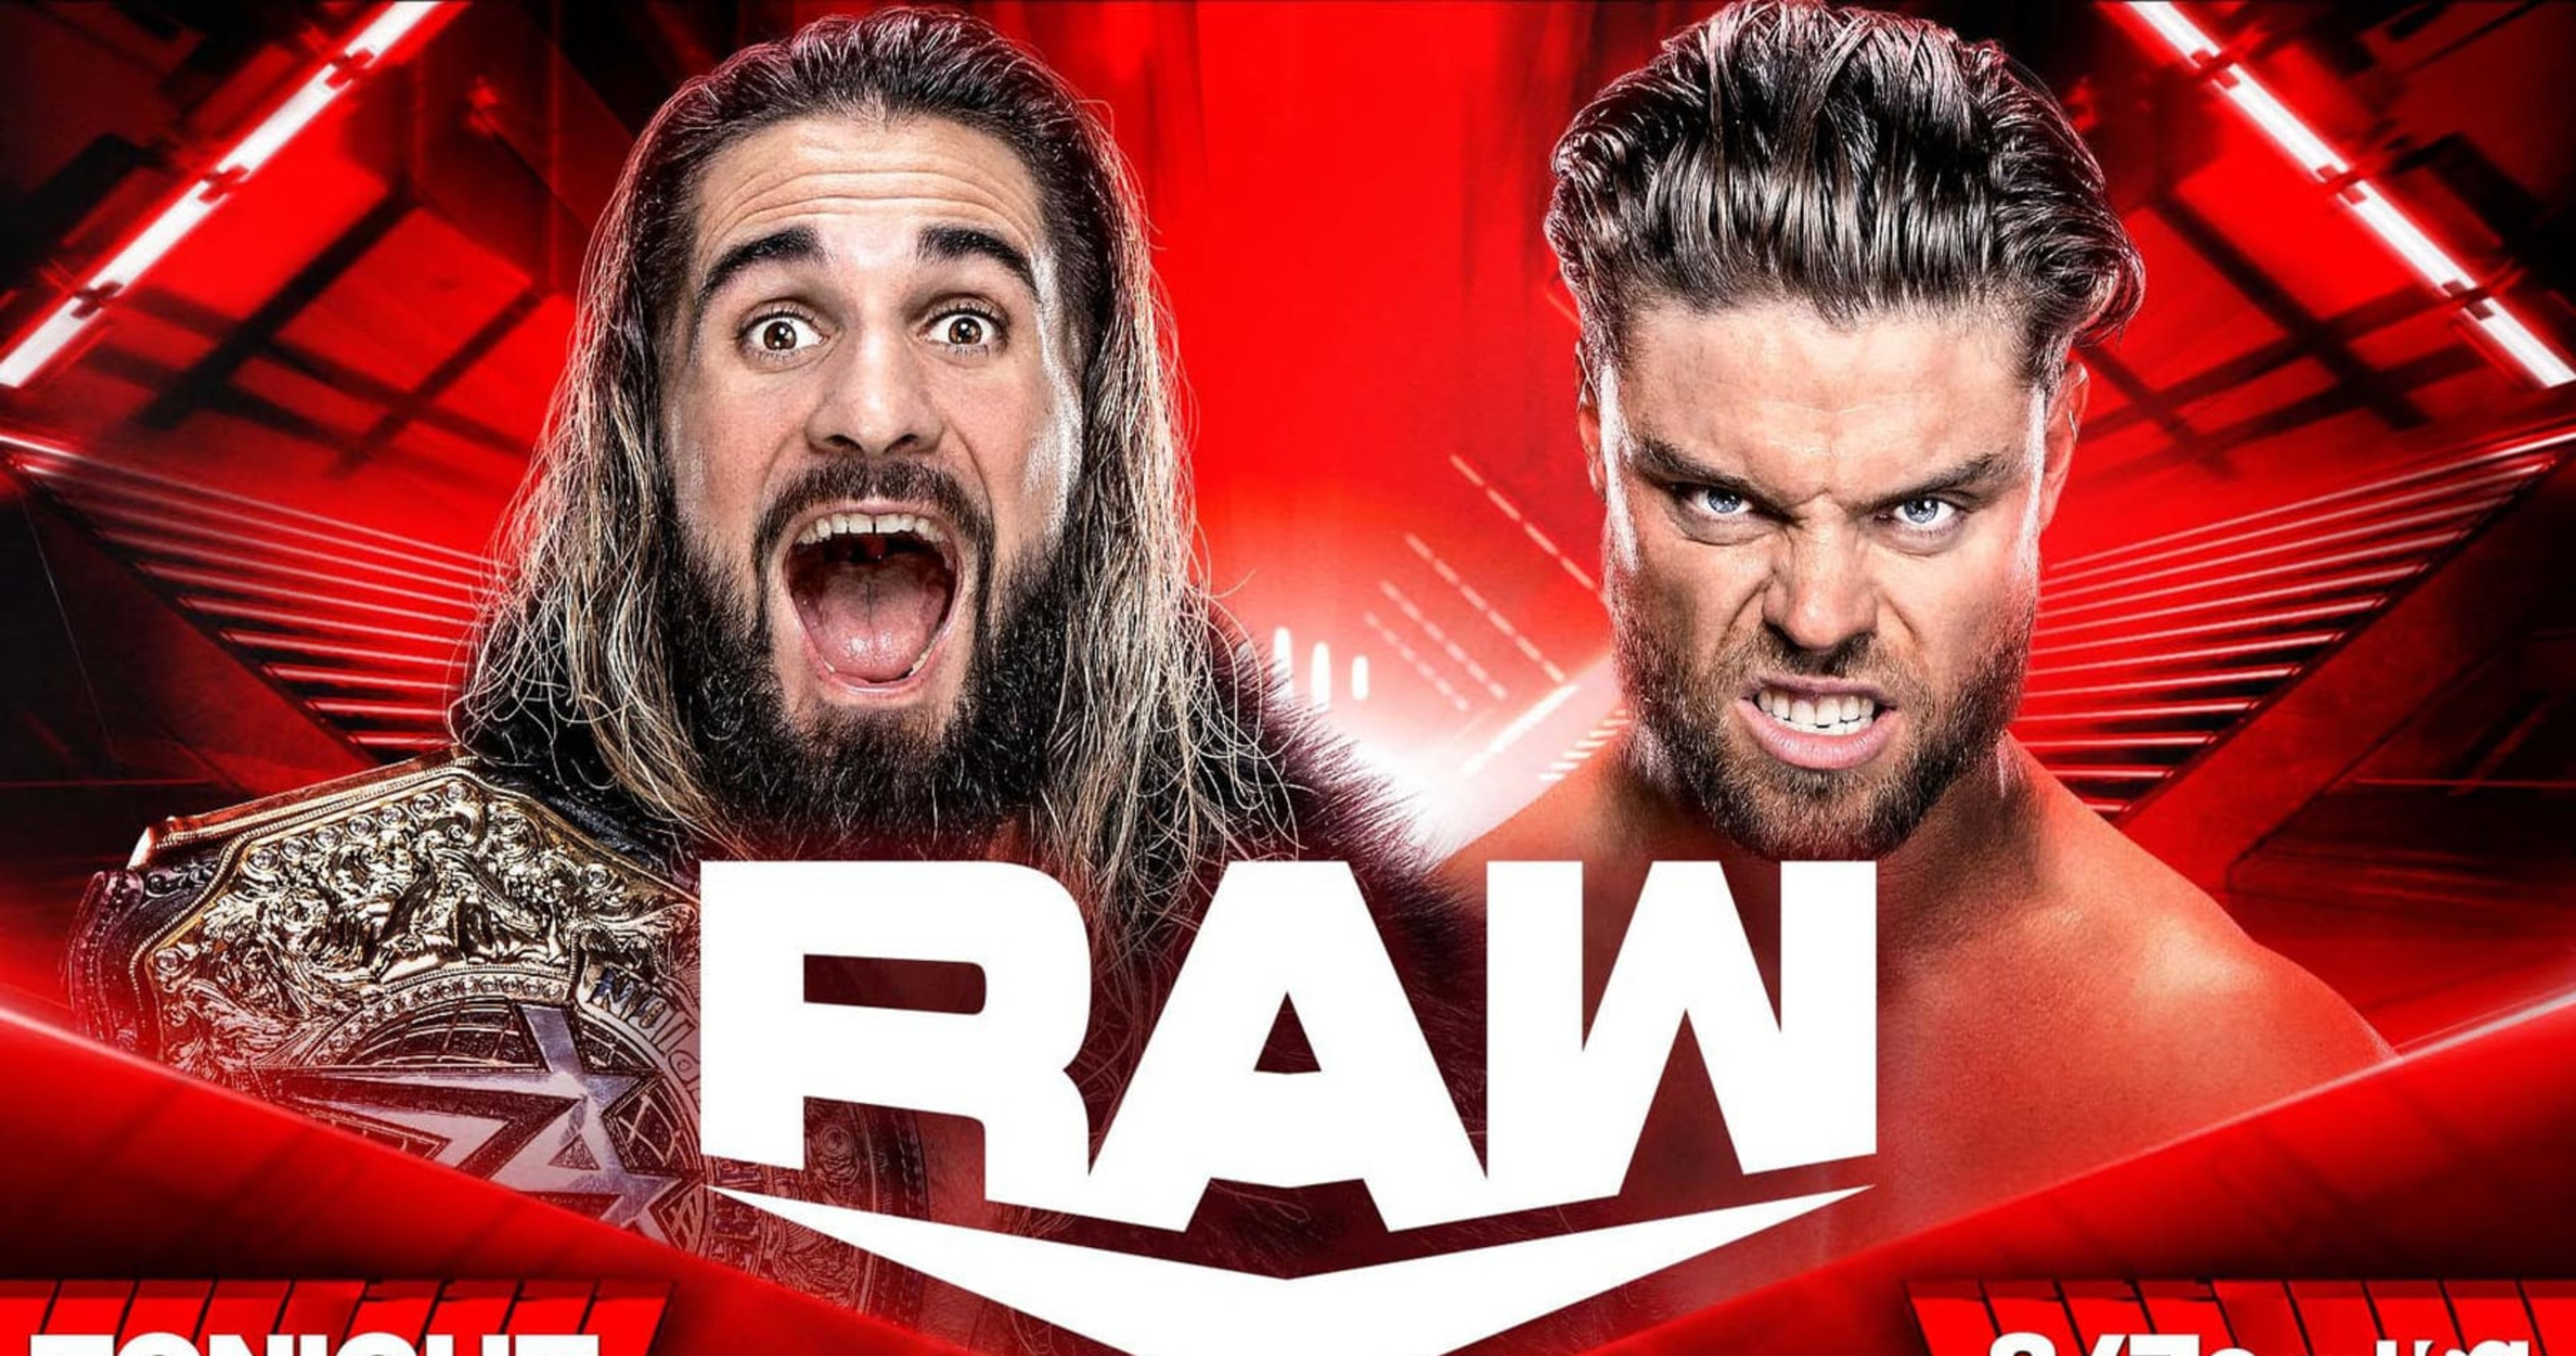 WWE: Monday Night RAW  Bon Secours Wellness Arena